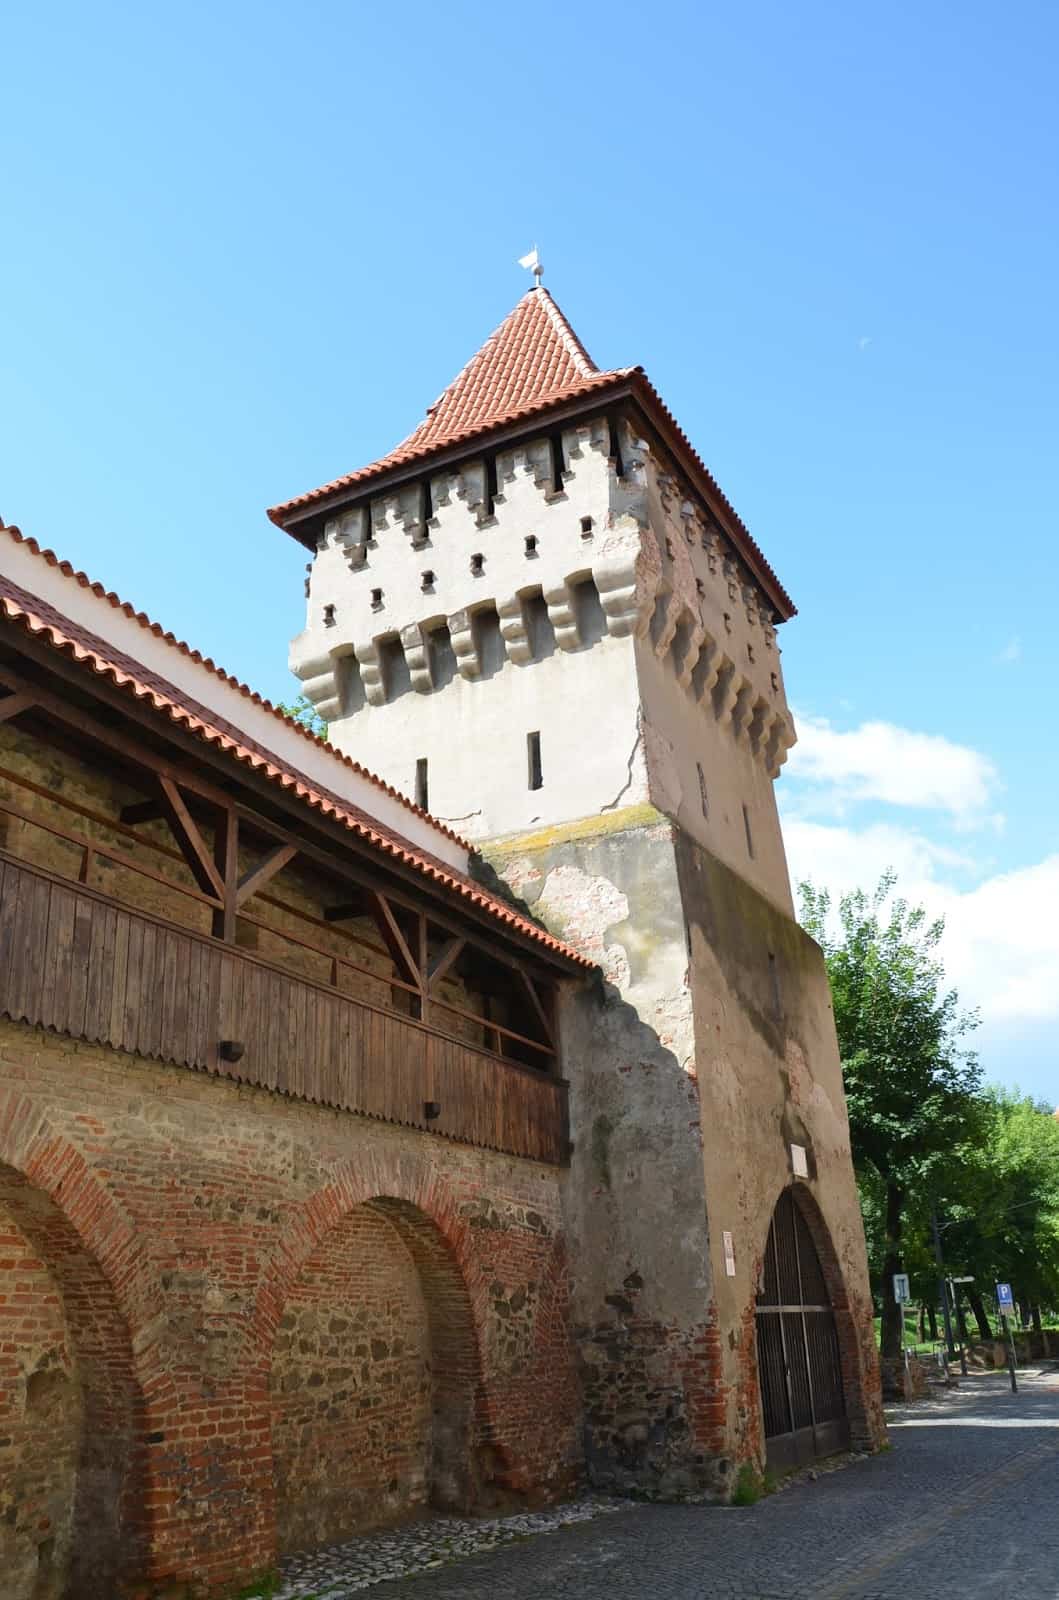 Potter’s Tower in Sibiu, Romania